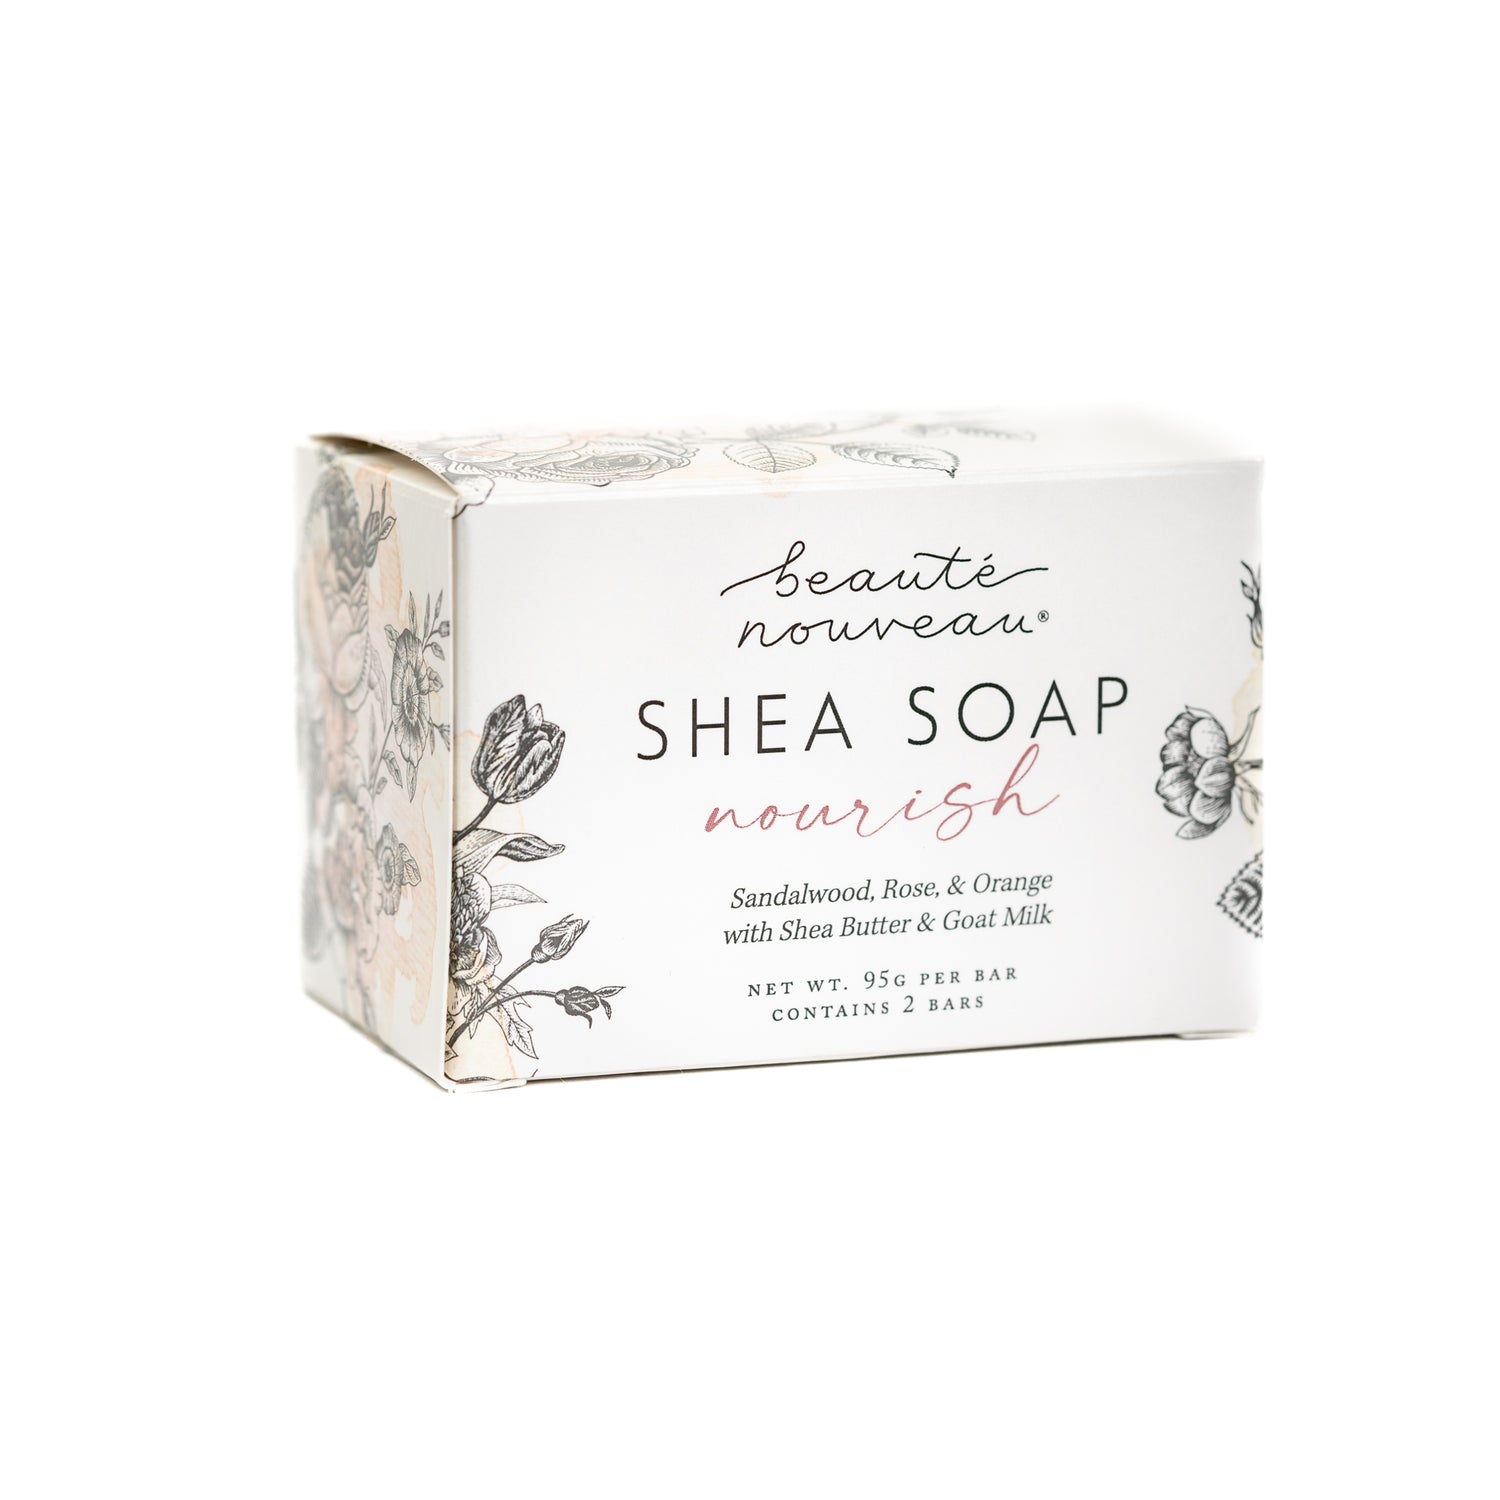 nourish shea soap (2 bars)